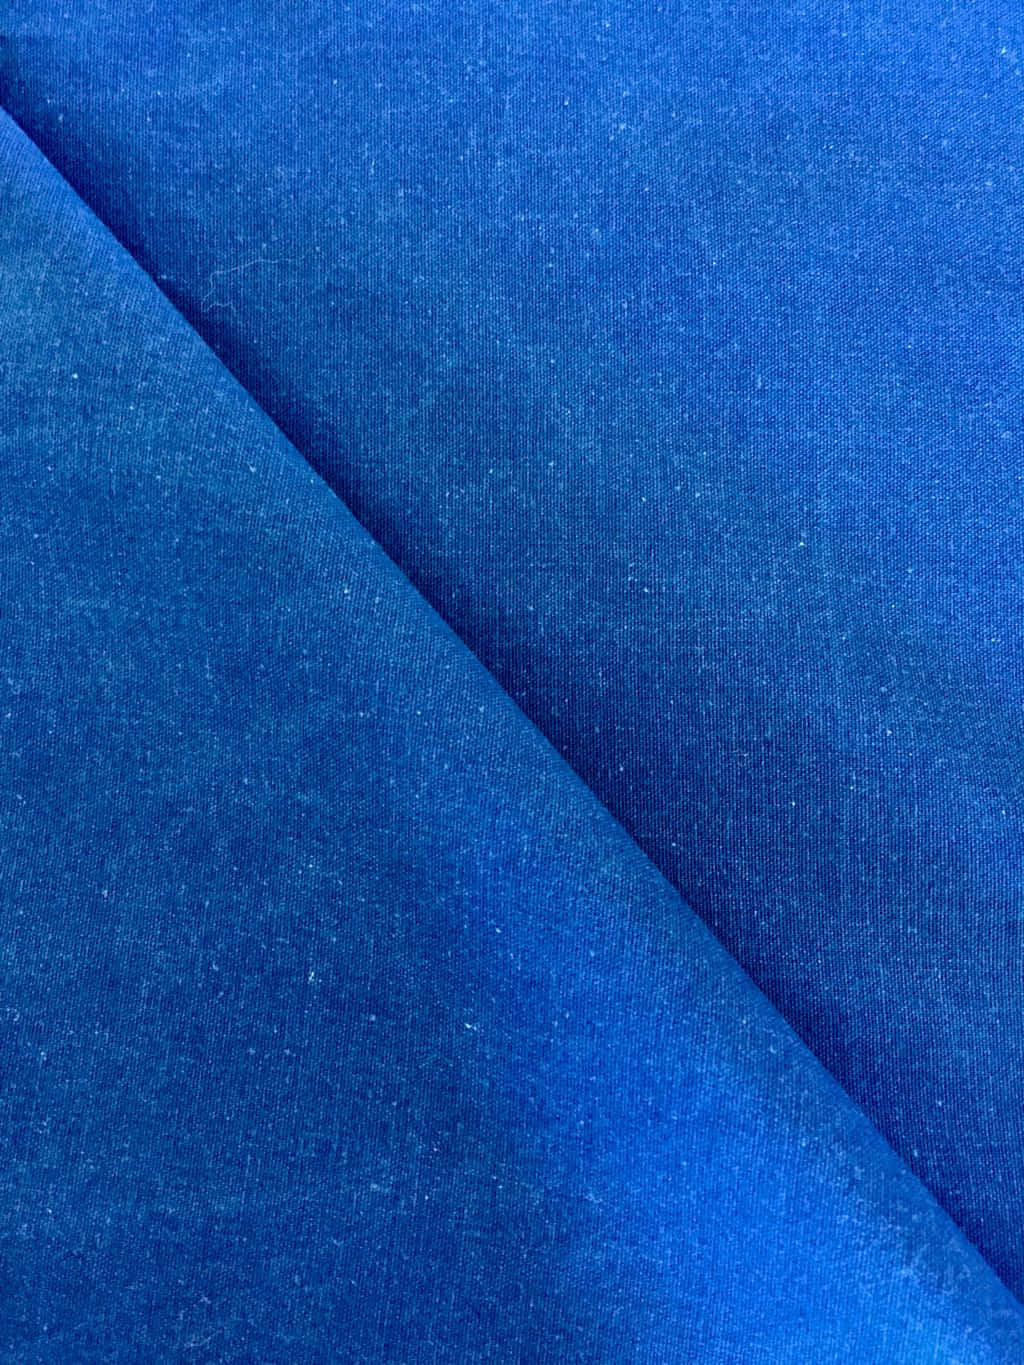 Vibrant Indigo Blue Wallpaper